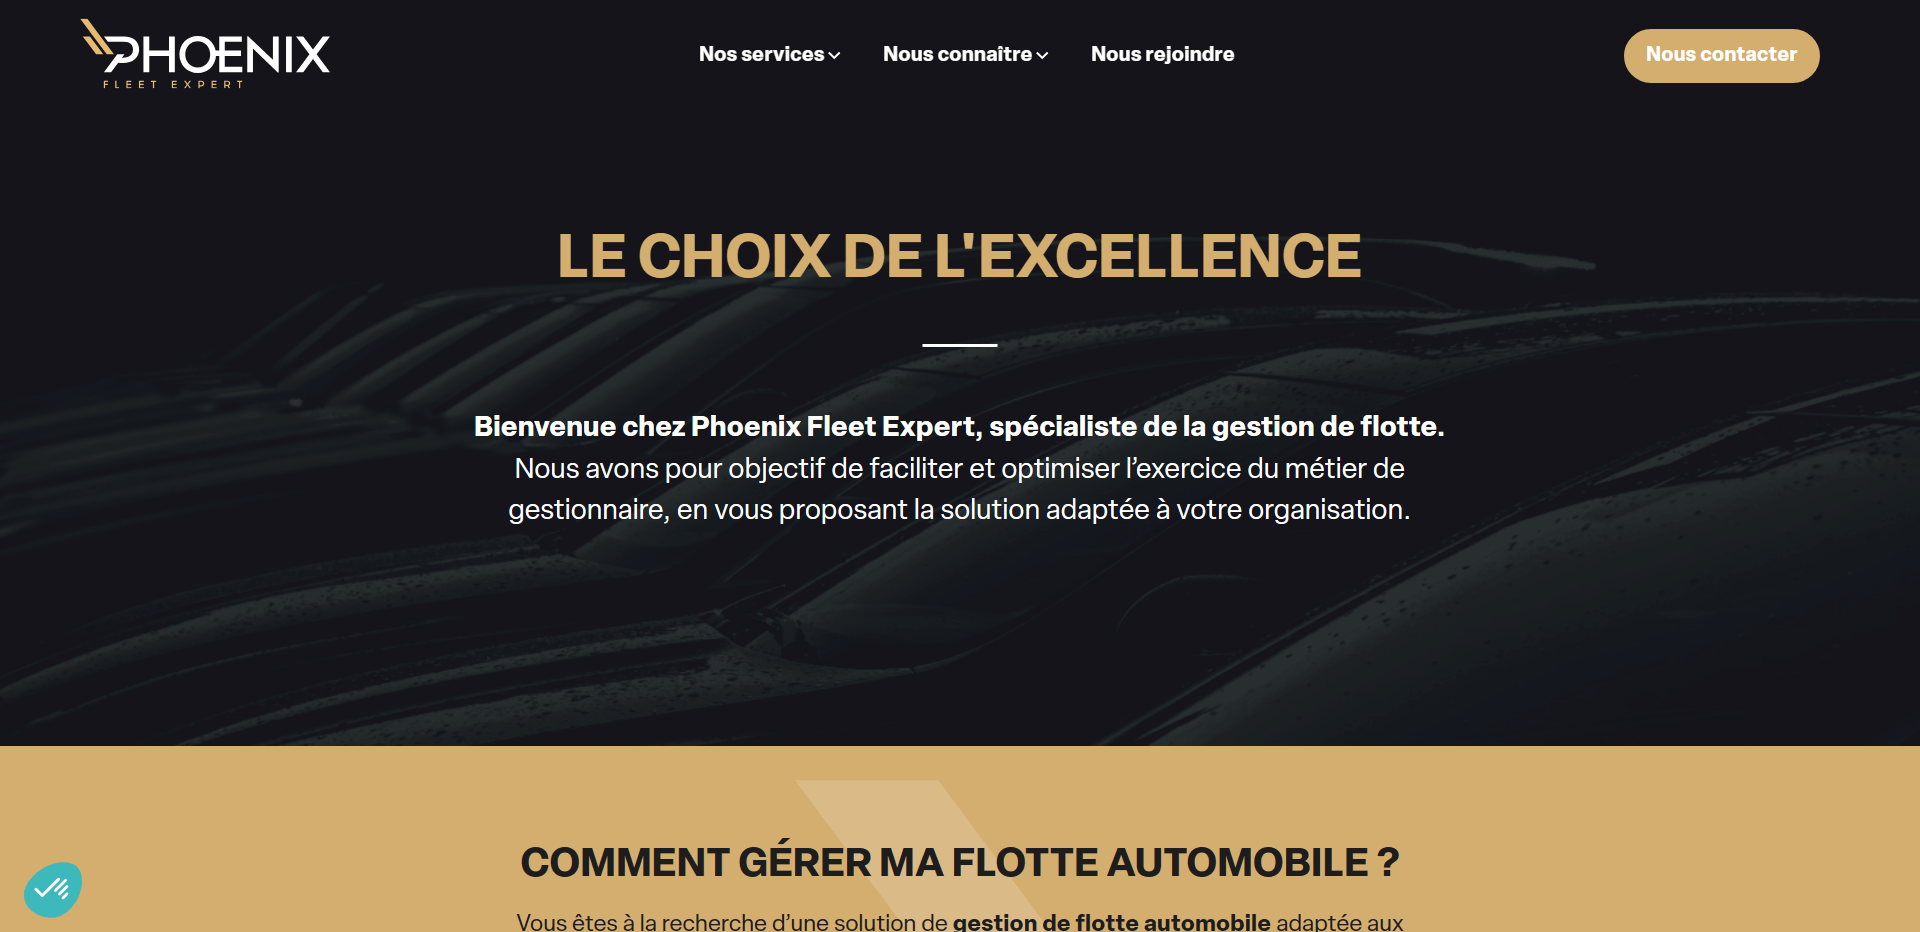 phoenix fleet expert gestion flotte automobile